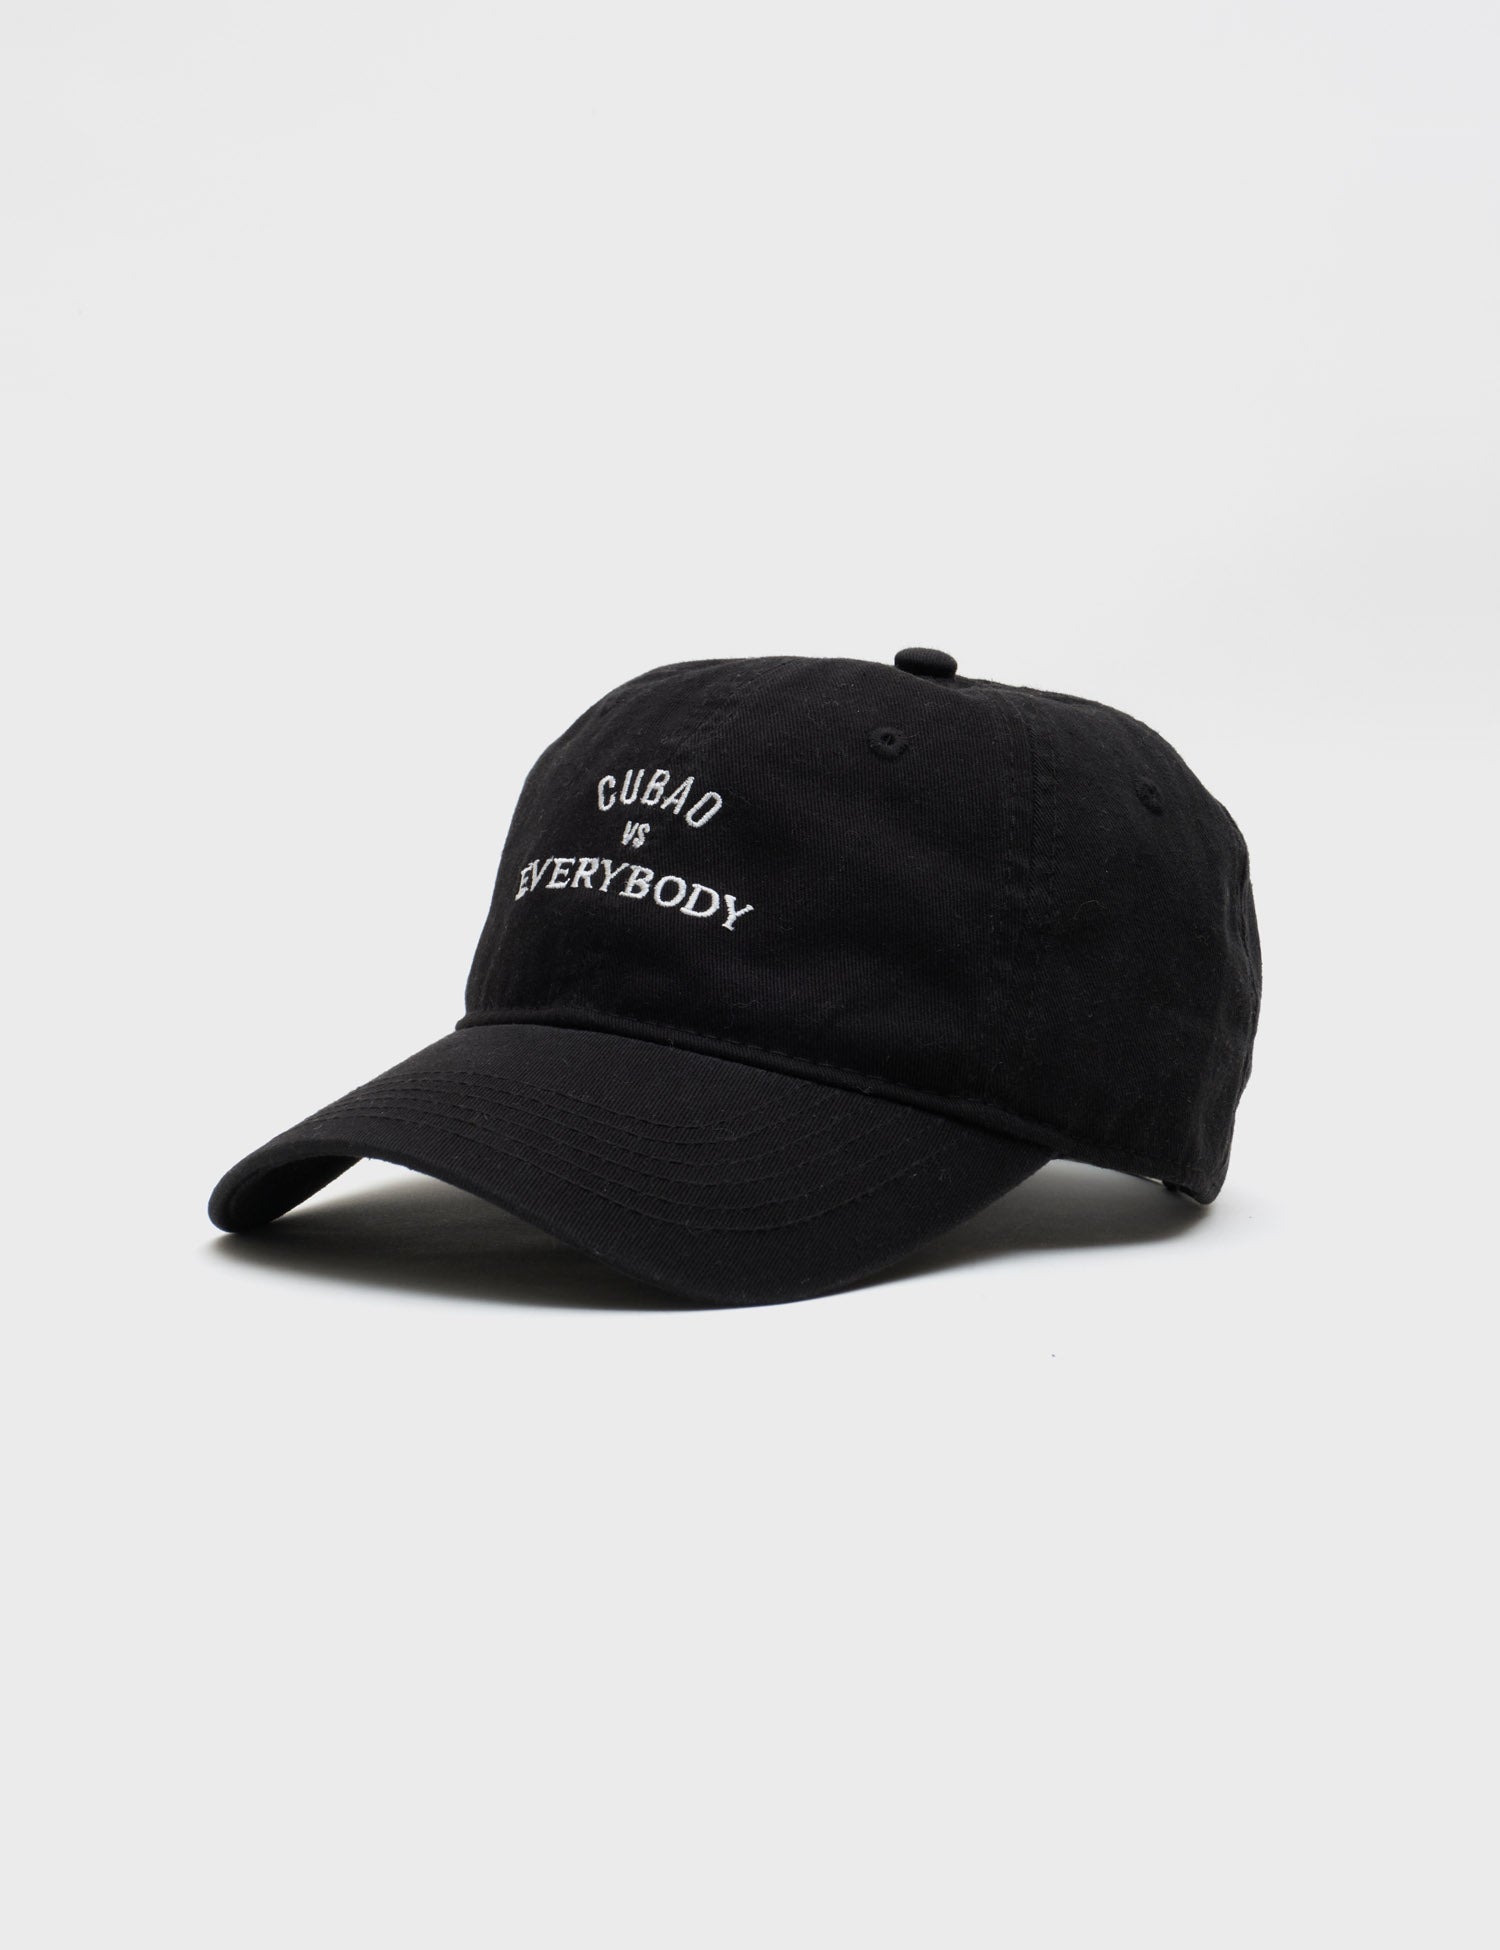 Cubao VS Everybody Hat (Black)